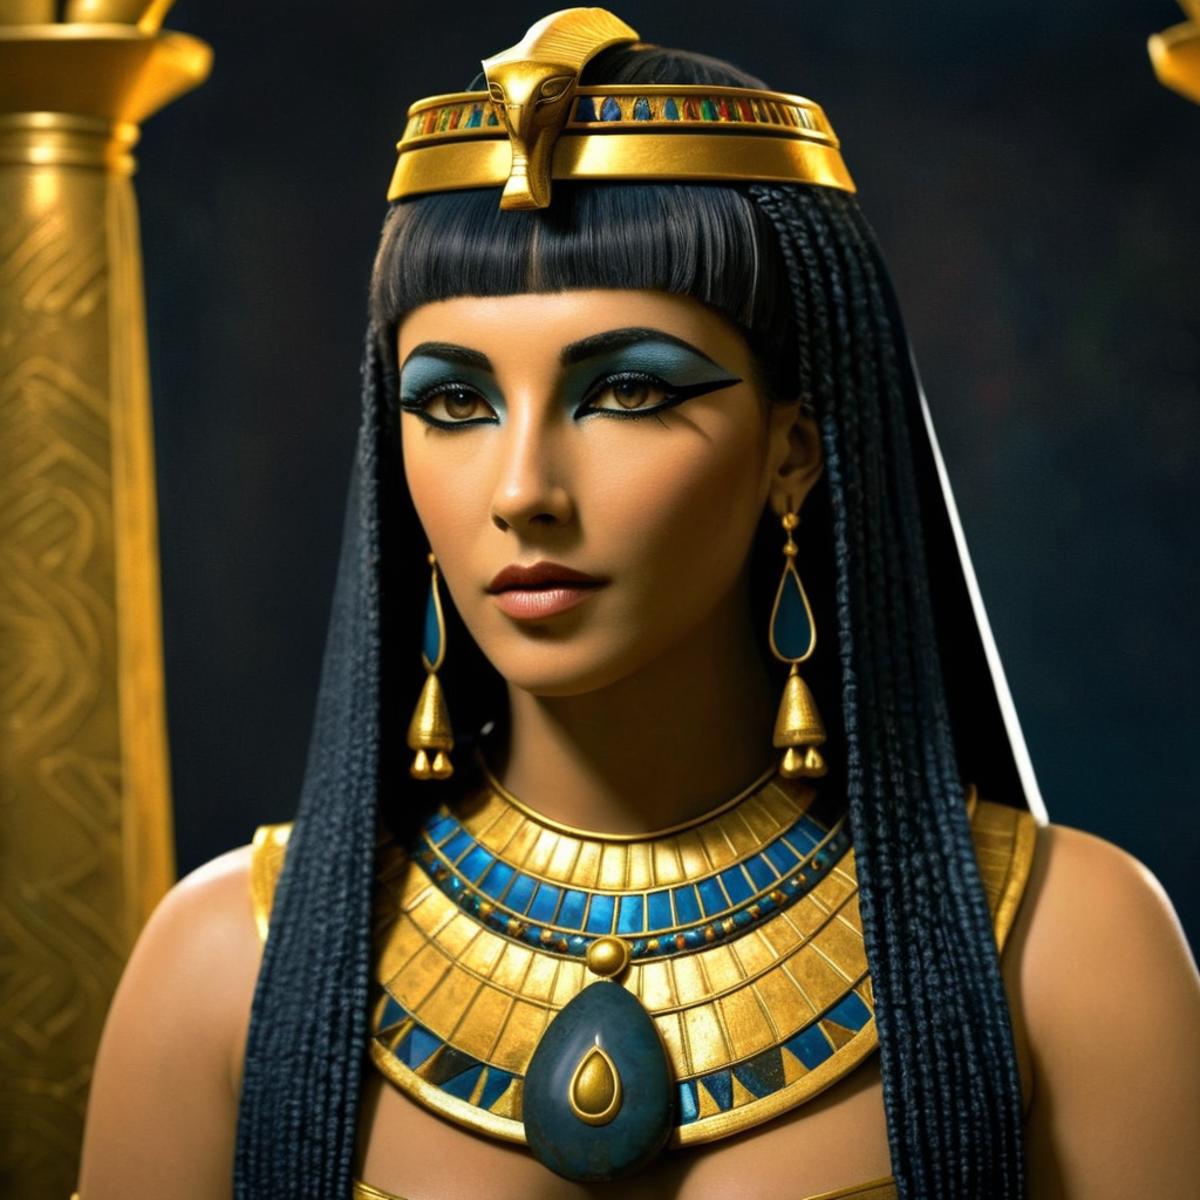 Cleopatra XL image by vantablackdark